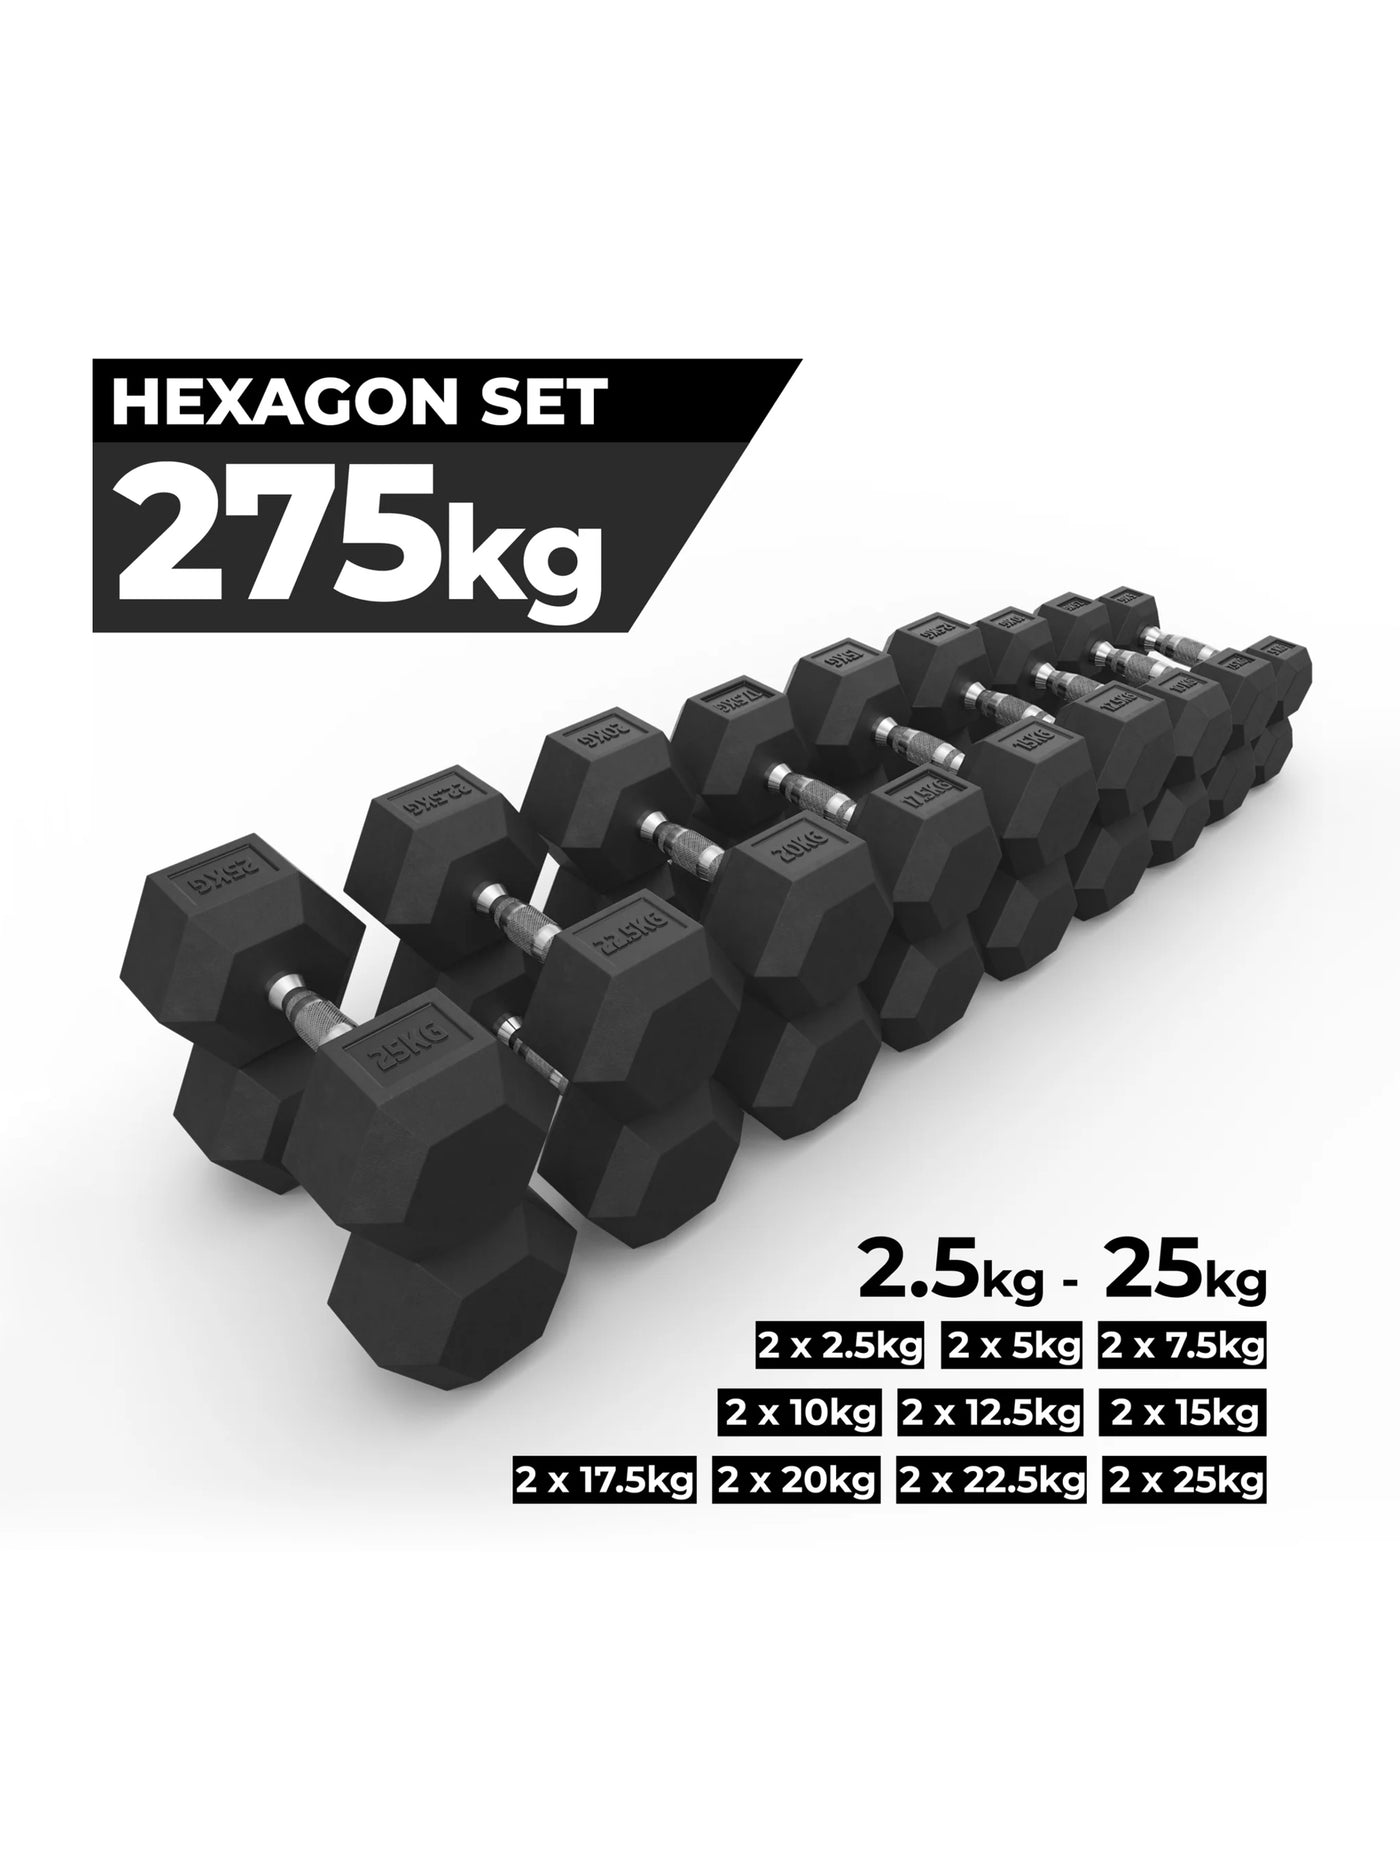 ATLETICA Hexagon kg | - 25 Set Hantel Kurzhanteln kg 2.5